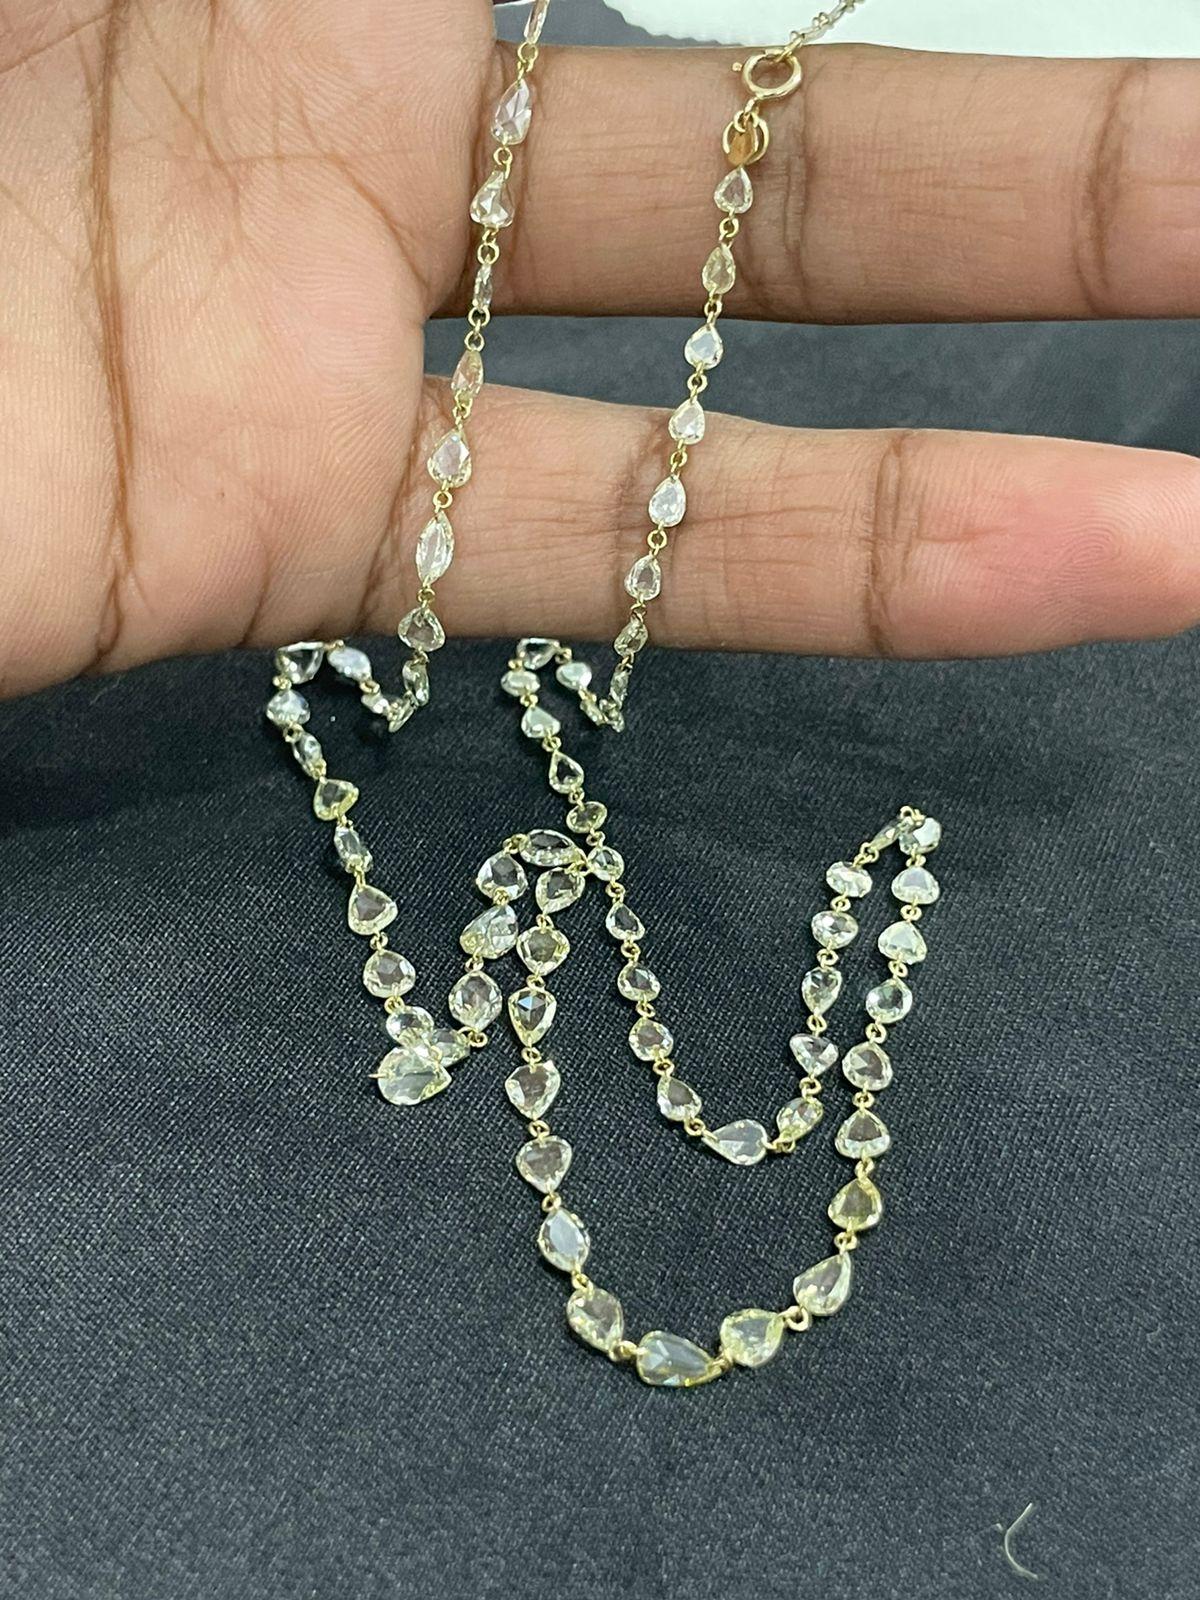 PANIM 11.43 Cts Fancy Rosecut Diamond Necklace in 18 Karat White Gold For Sale 2